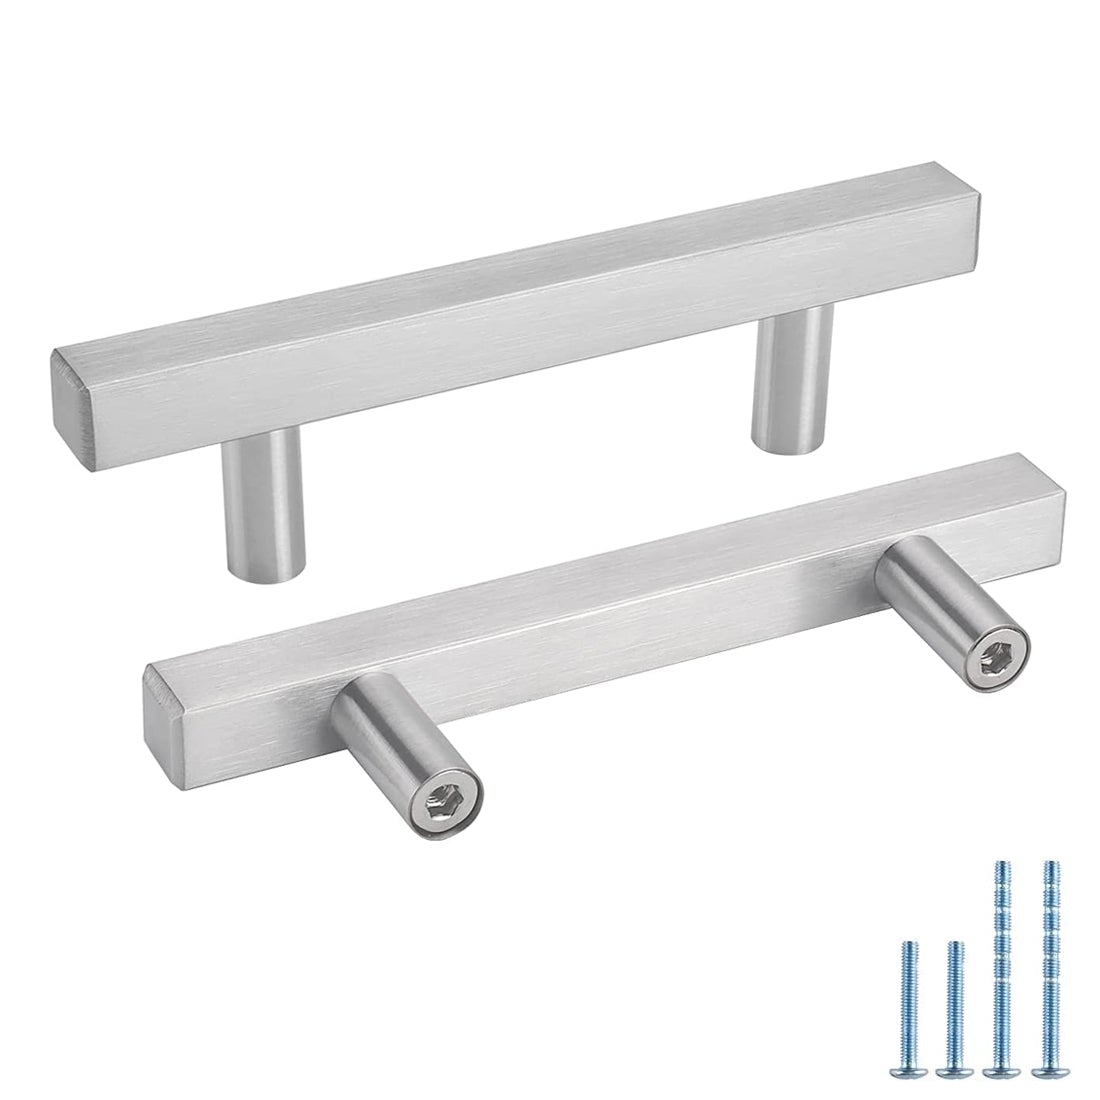 1 Pack Brushed Nickel Cabinet Handles Square Drawer Pulls For Kitchen (LSJ22BSS) -Homdiy